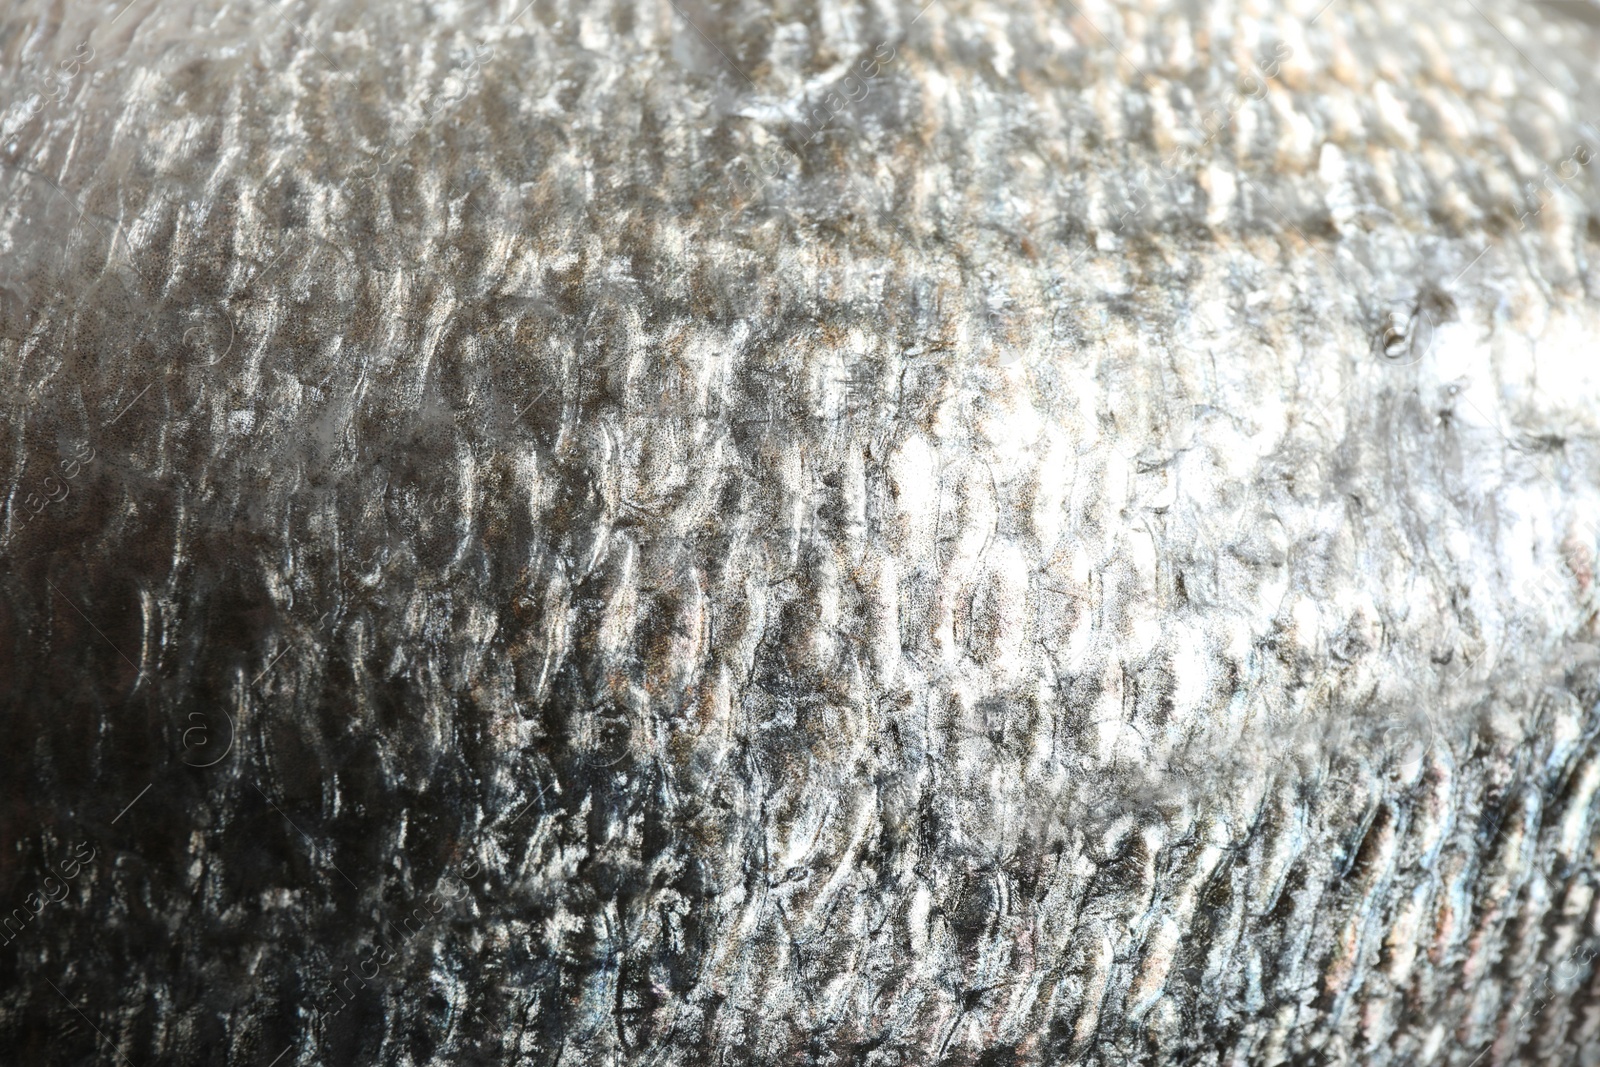 Photo of Raw dorada fish scale as background, closeup